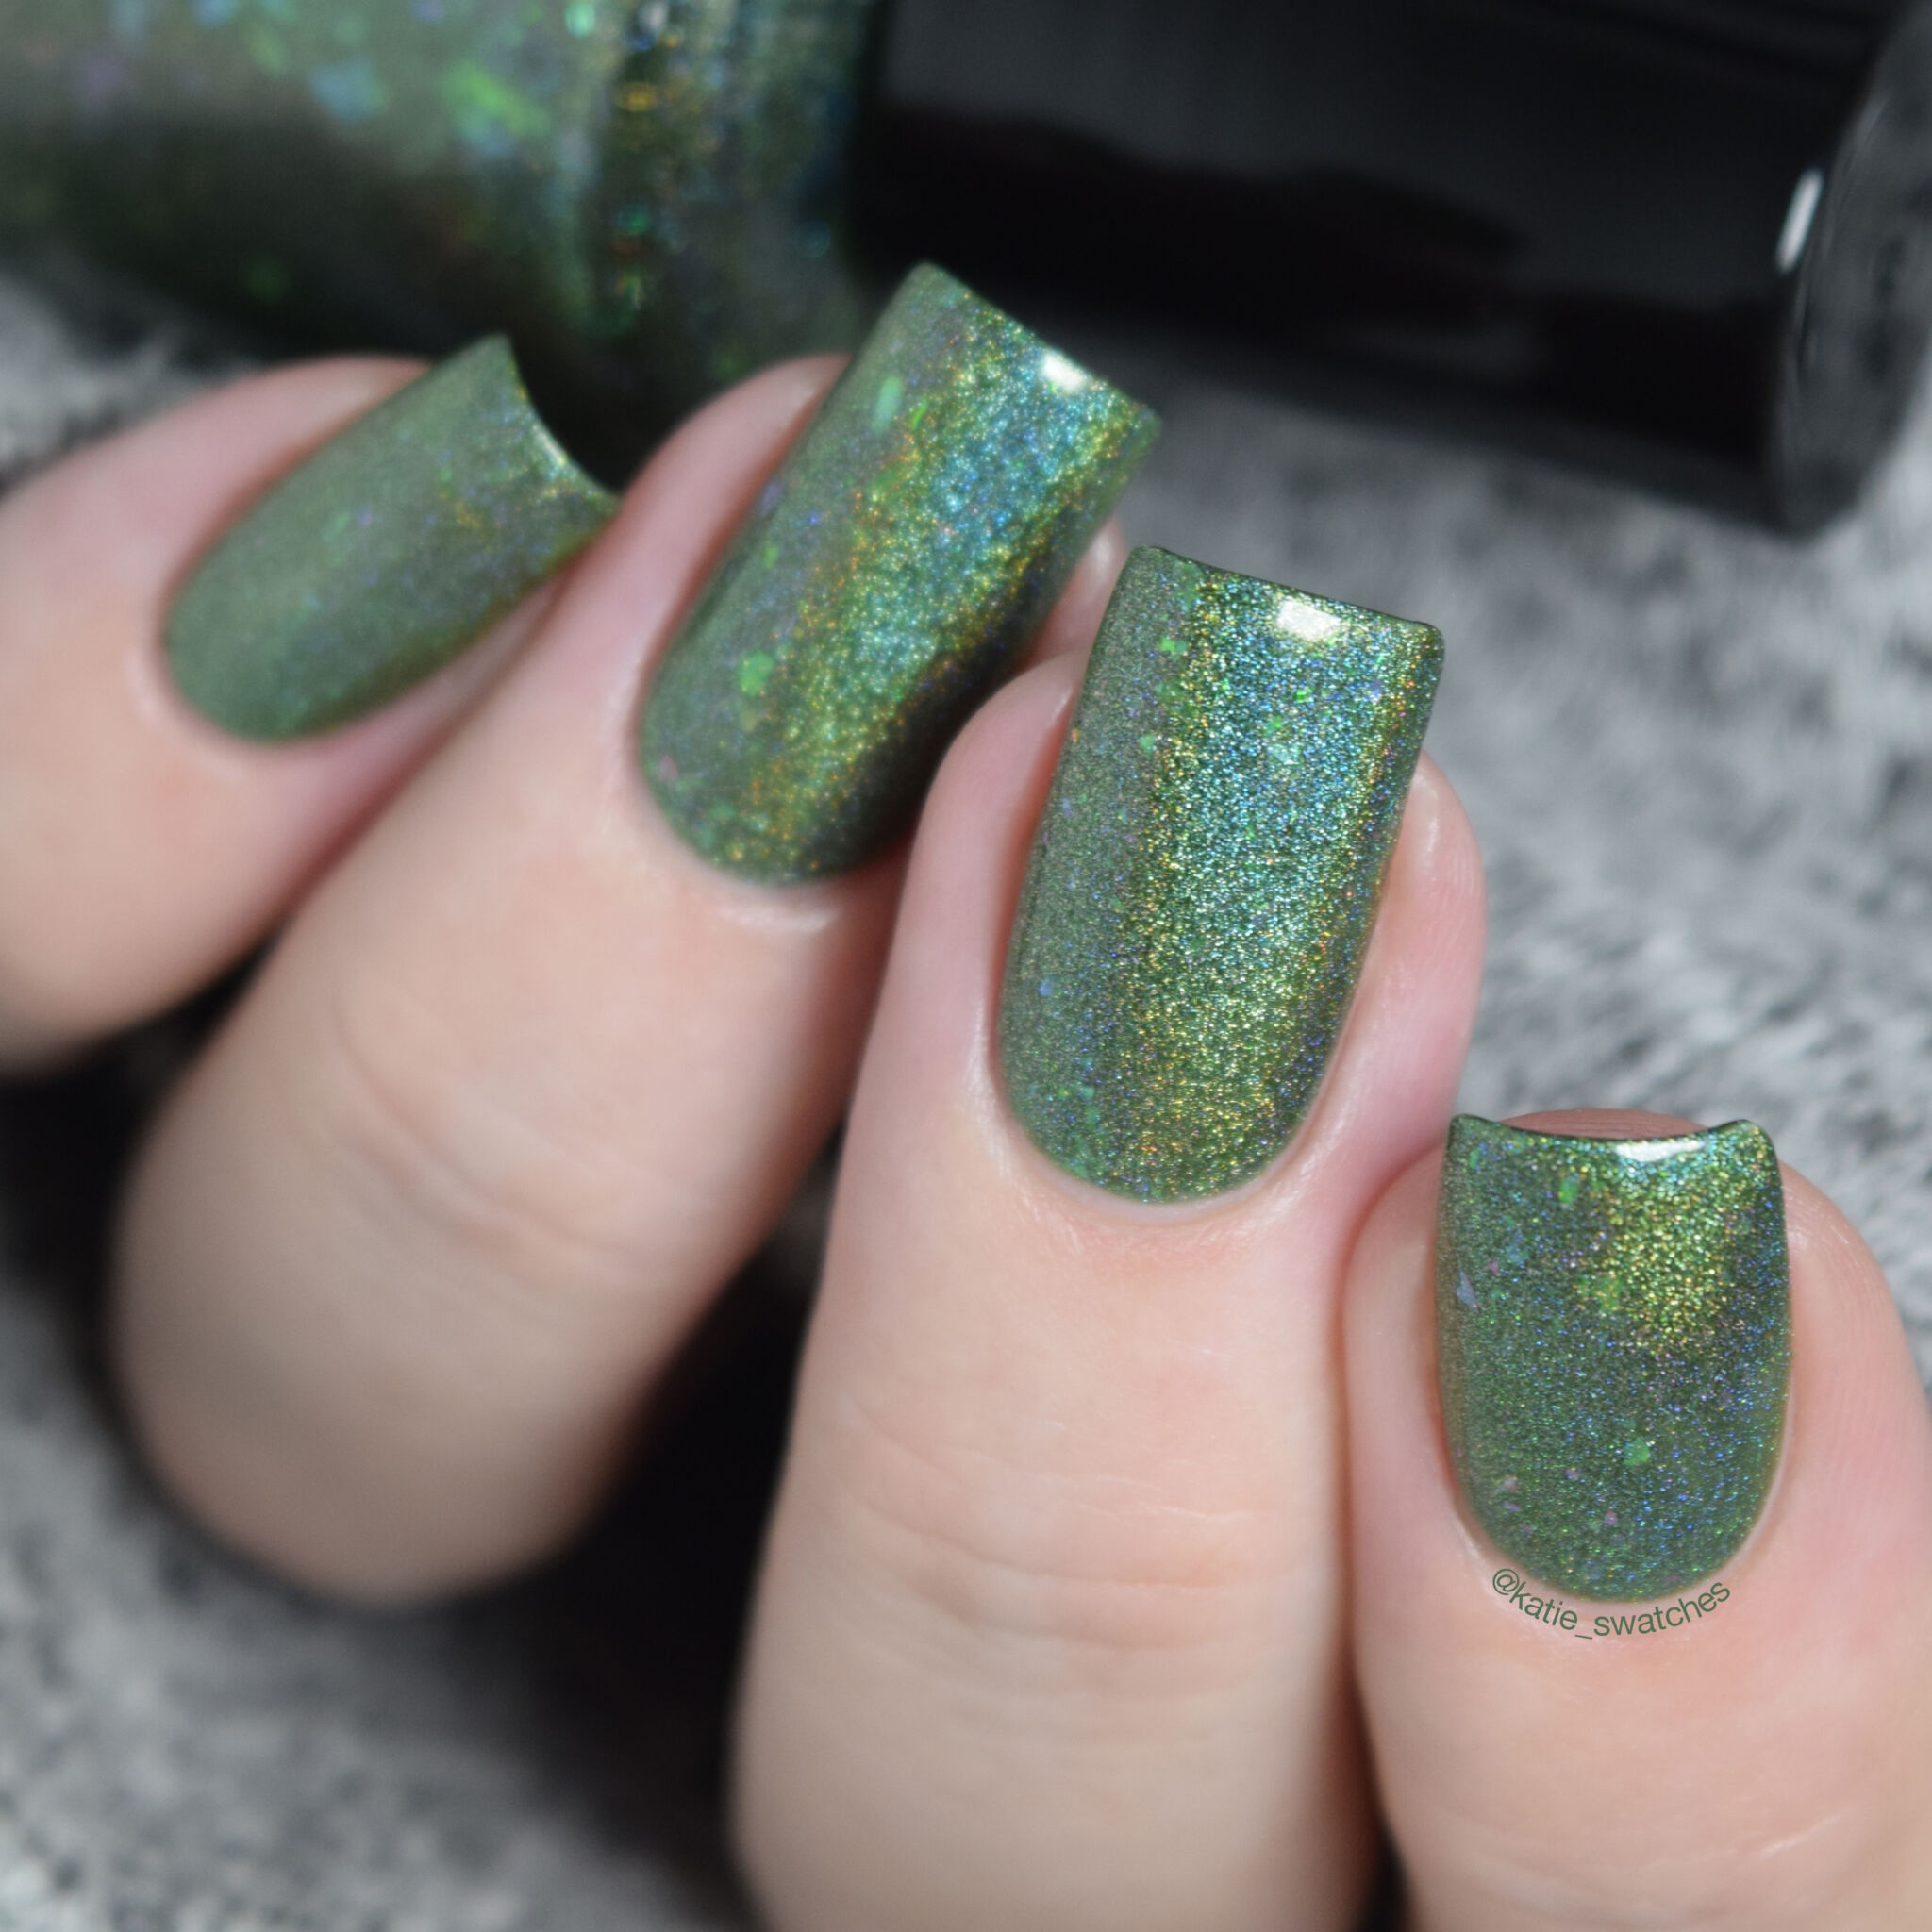 KBShimmer Fo Shizzle green holographic nail polish - Polish Pickup February 2019